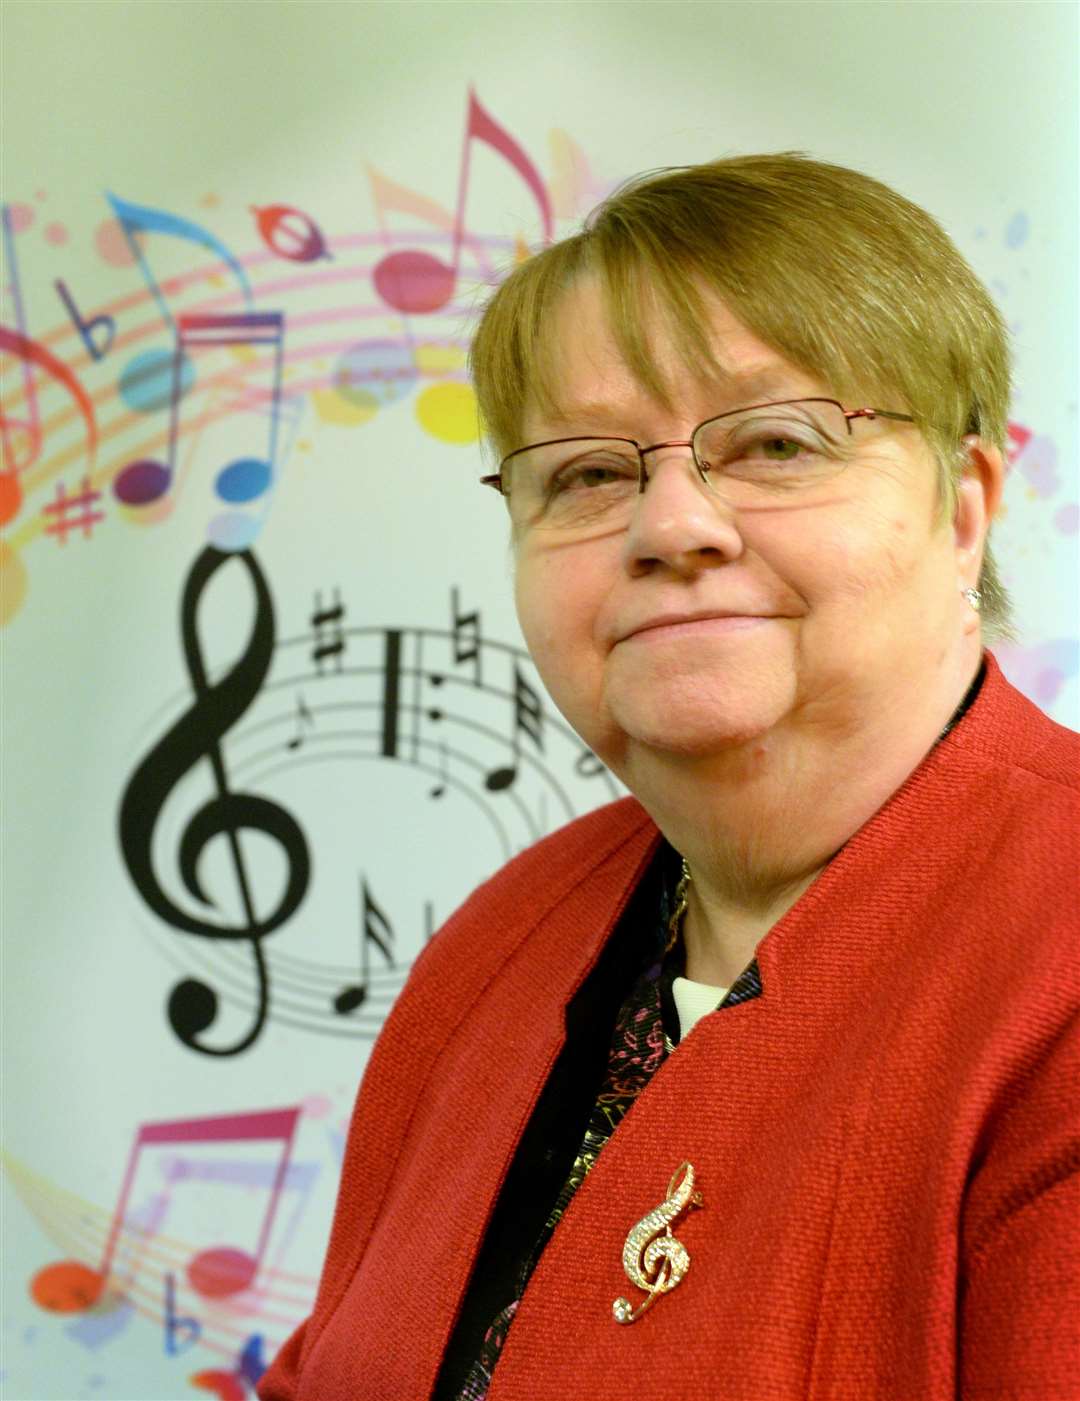 Jean Slater, of Inverness Music Festival